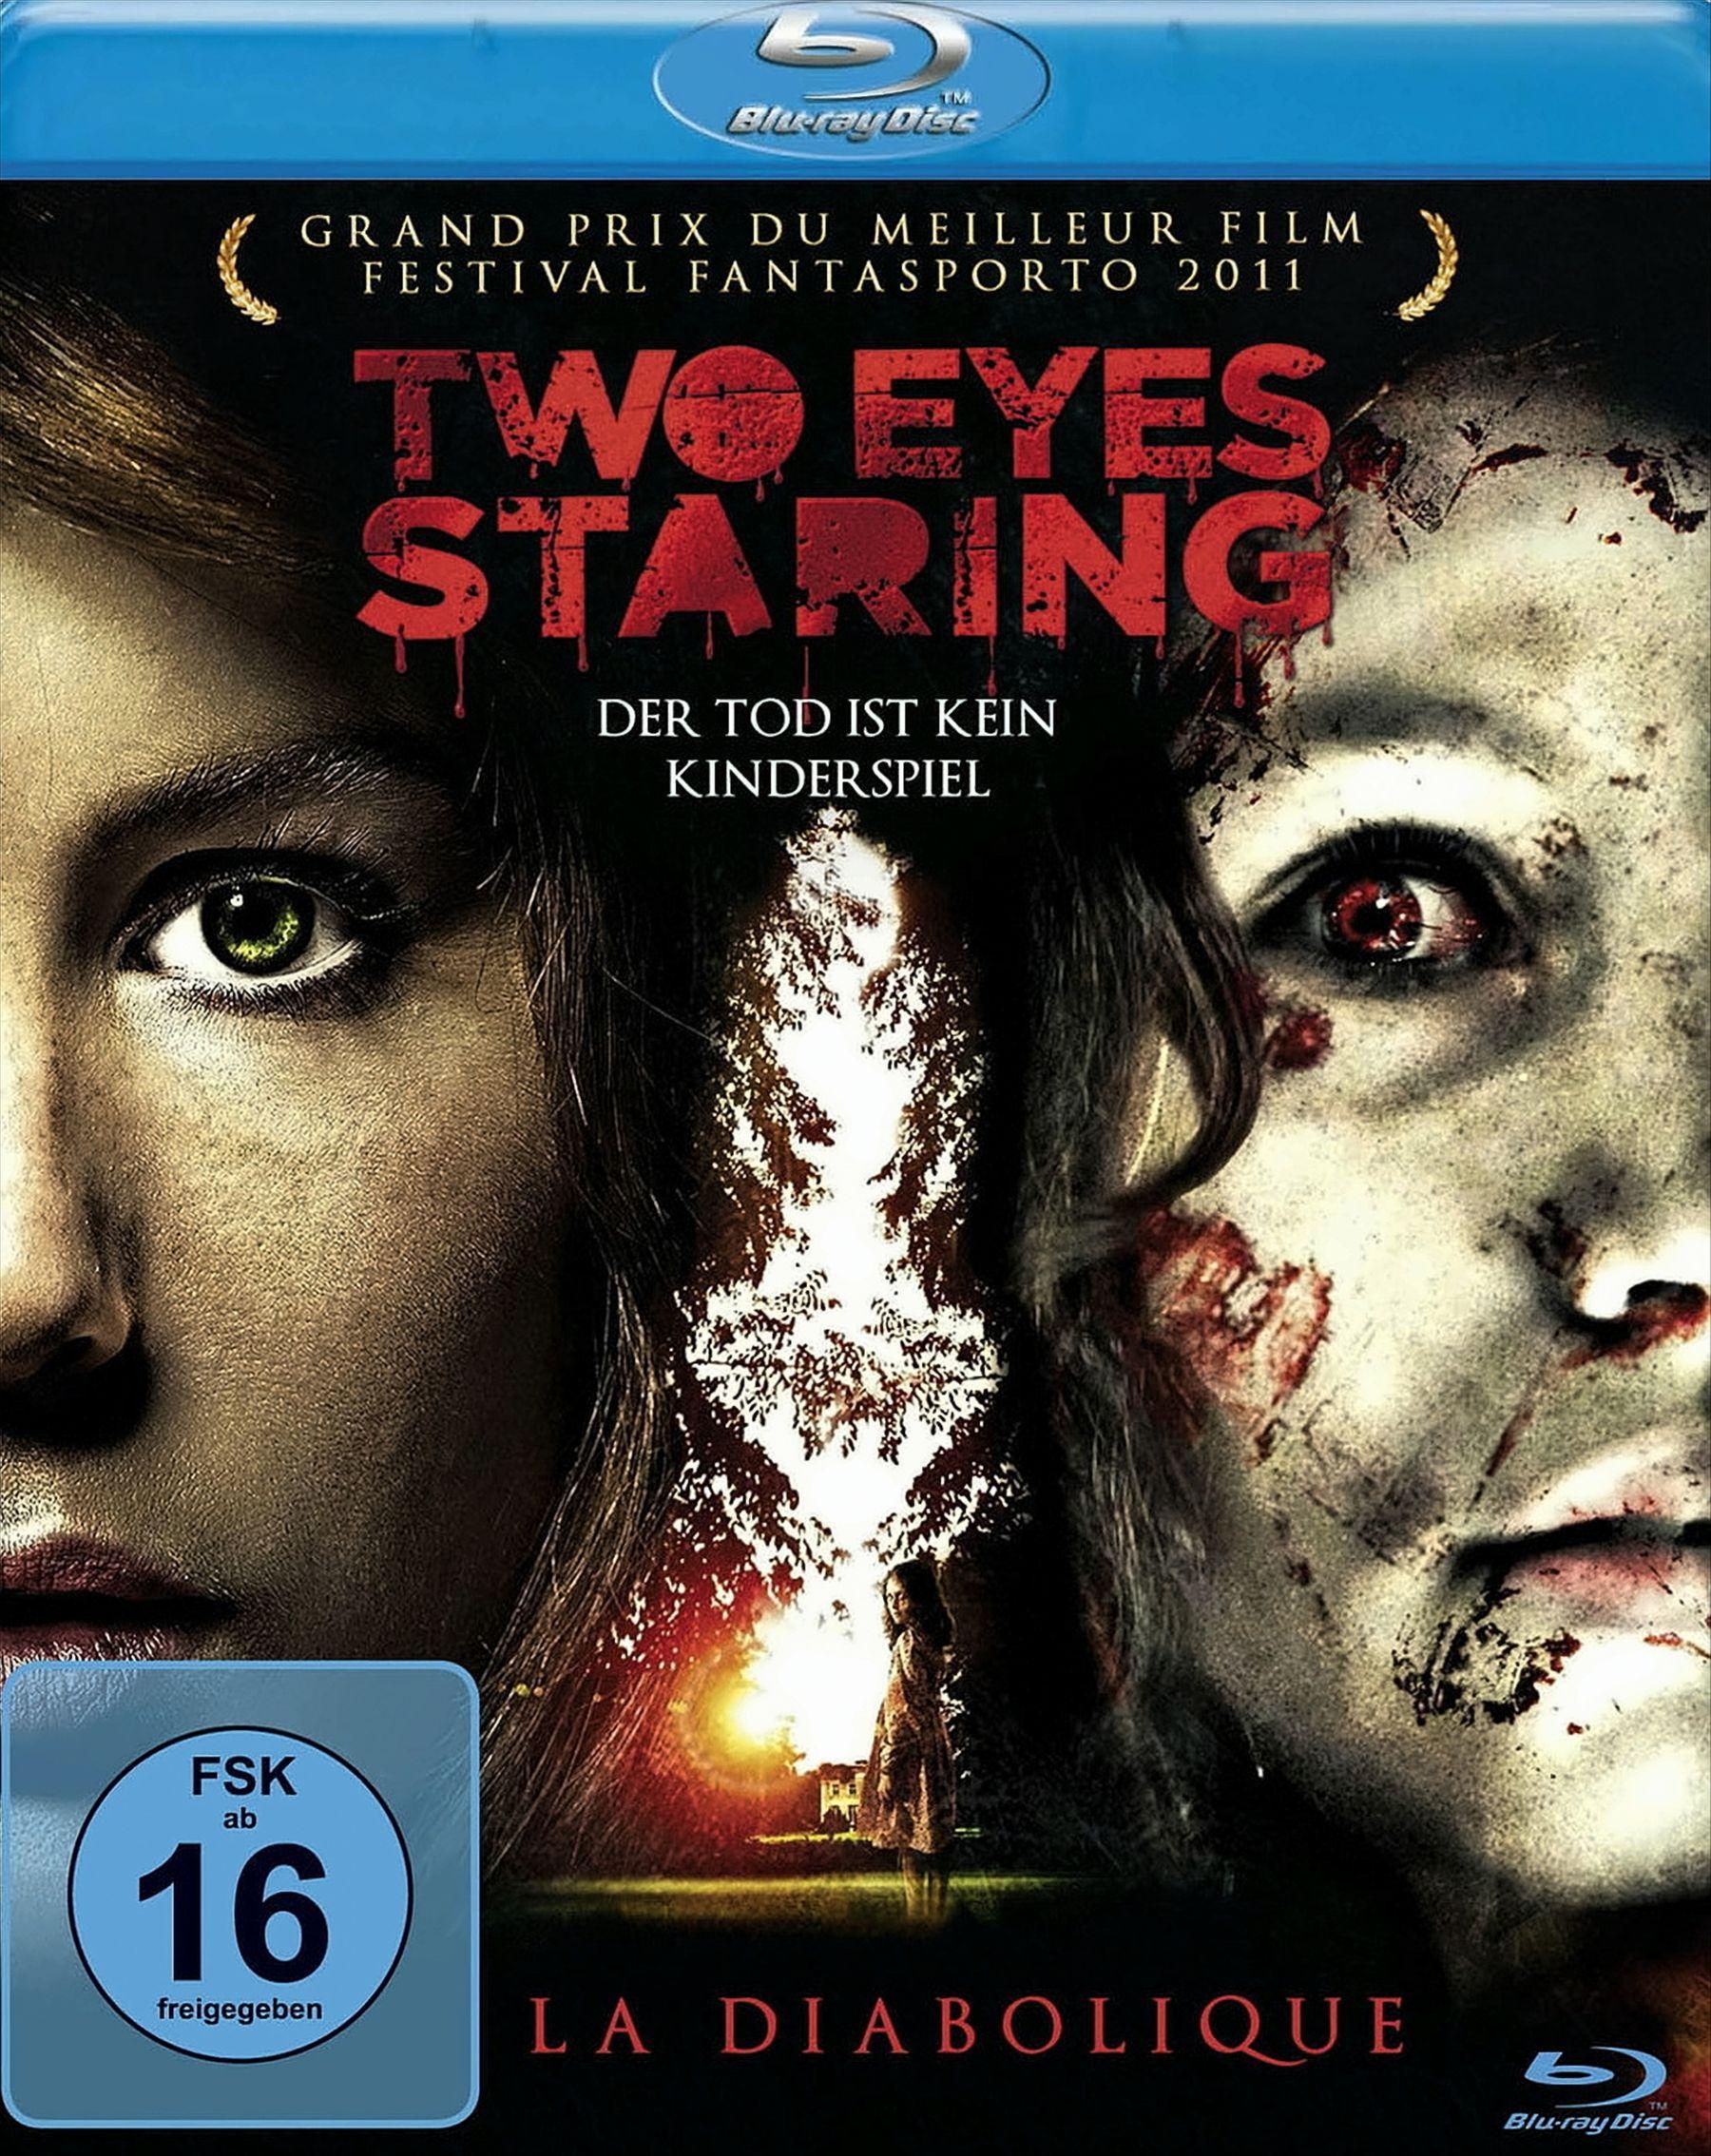 Two Eyes Staring Tod Blu-ray Der - Kinderspiel ist kein